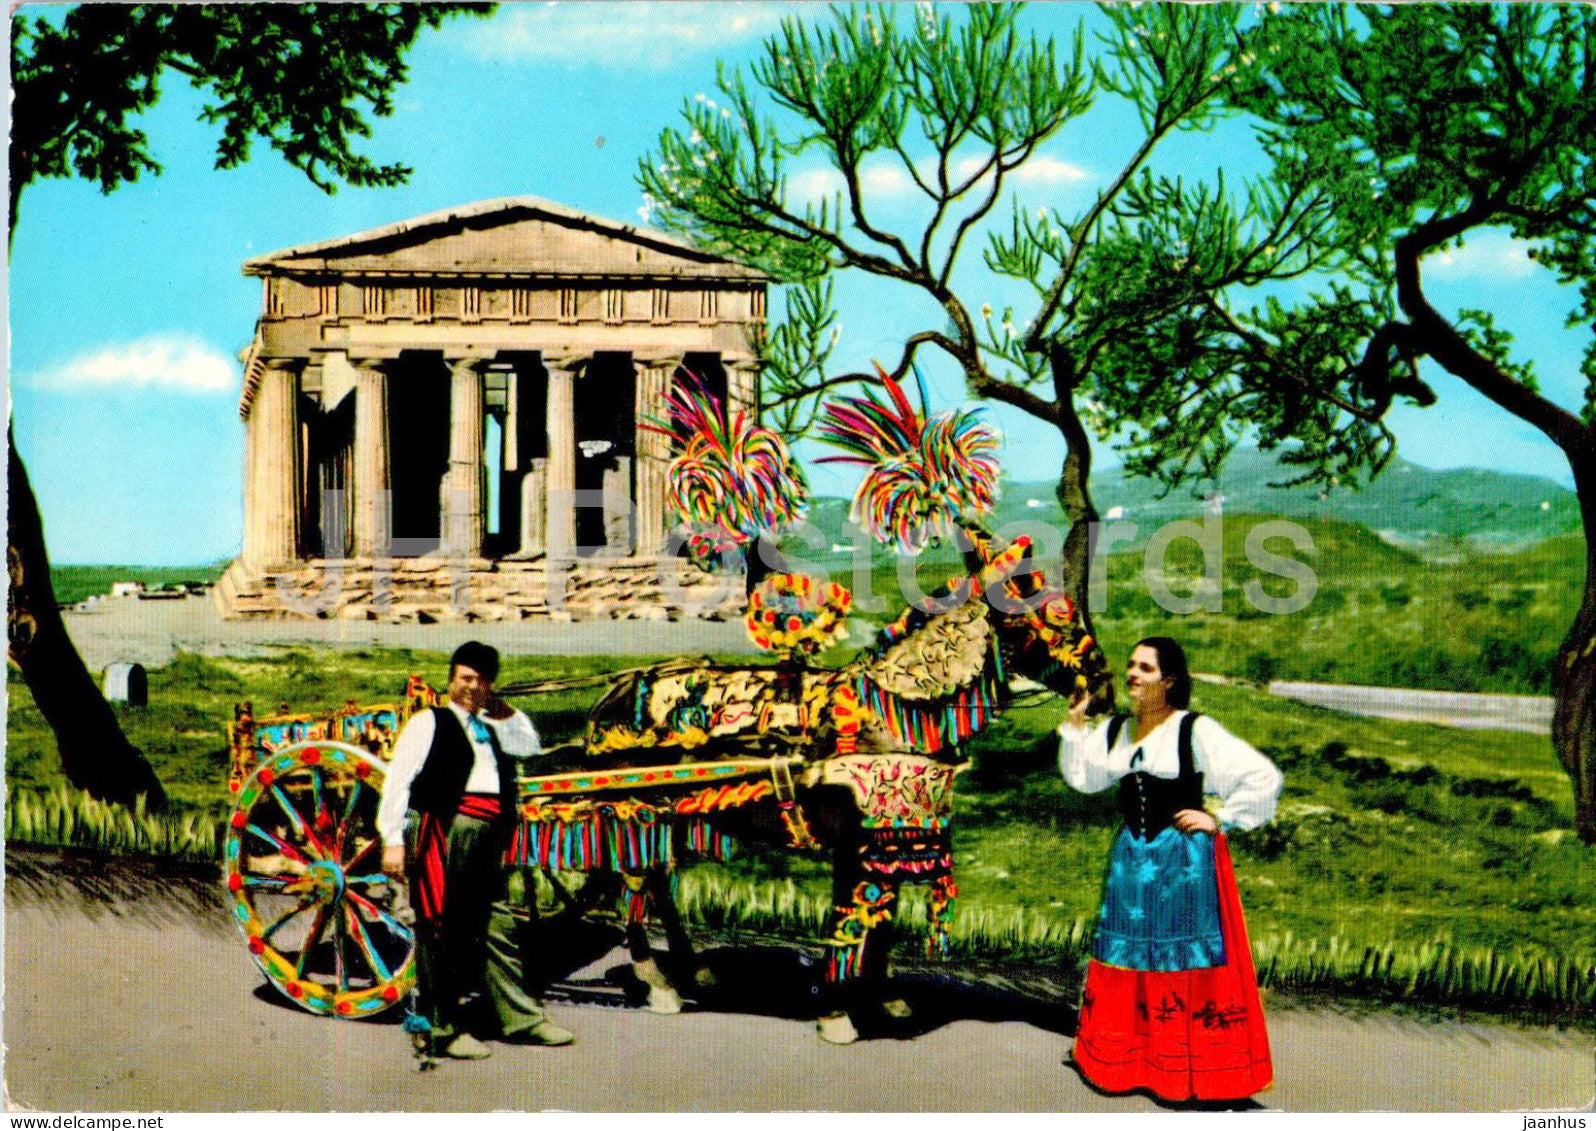 Carretto Siciliano - Sicilian cart - folk costume - horse - 2/224 - 1986 - Italy - used - JH Postcards